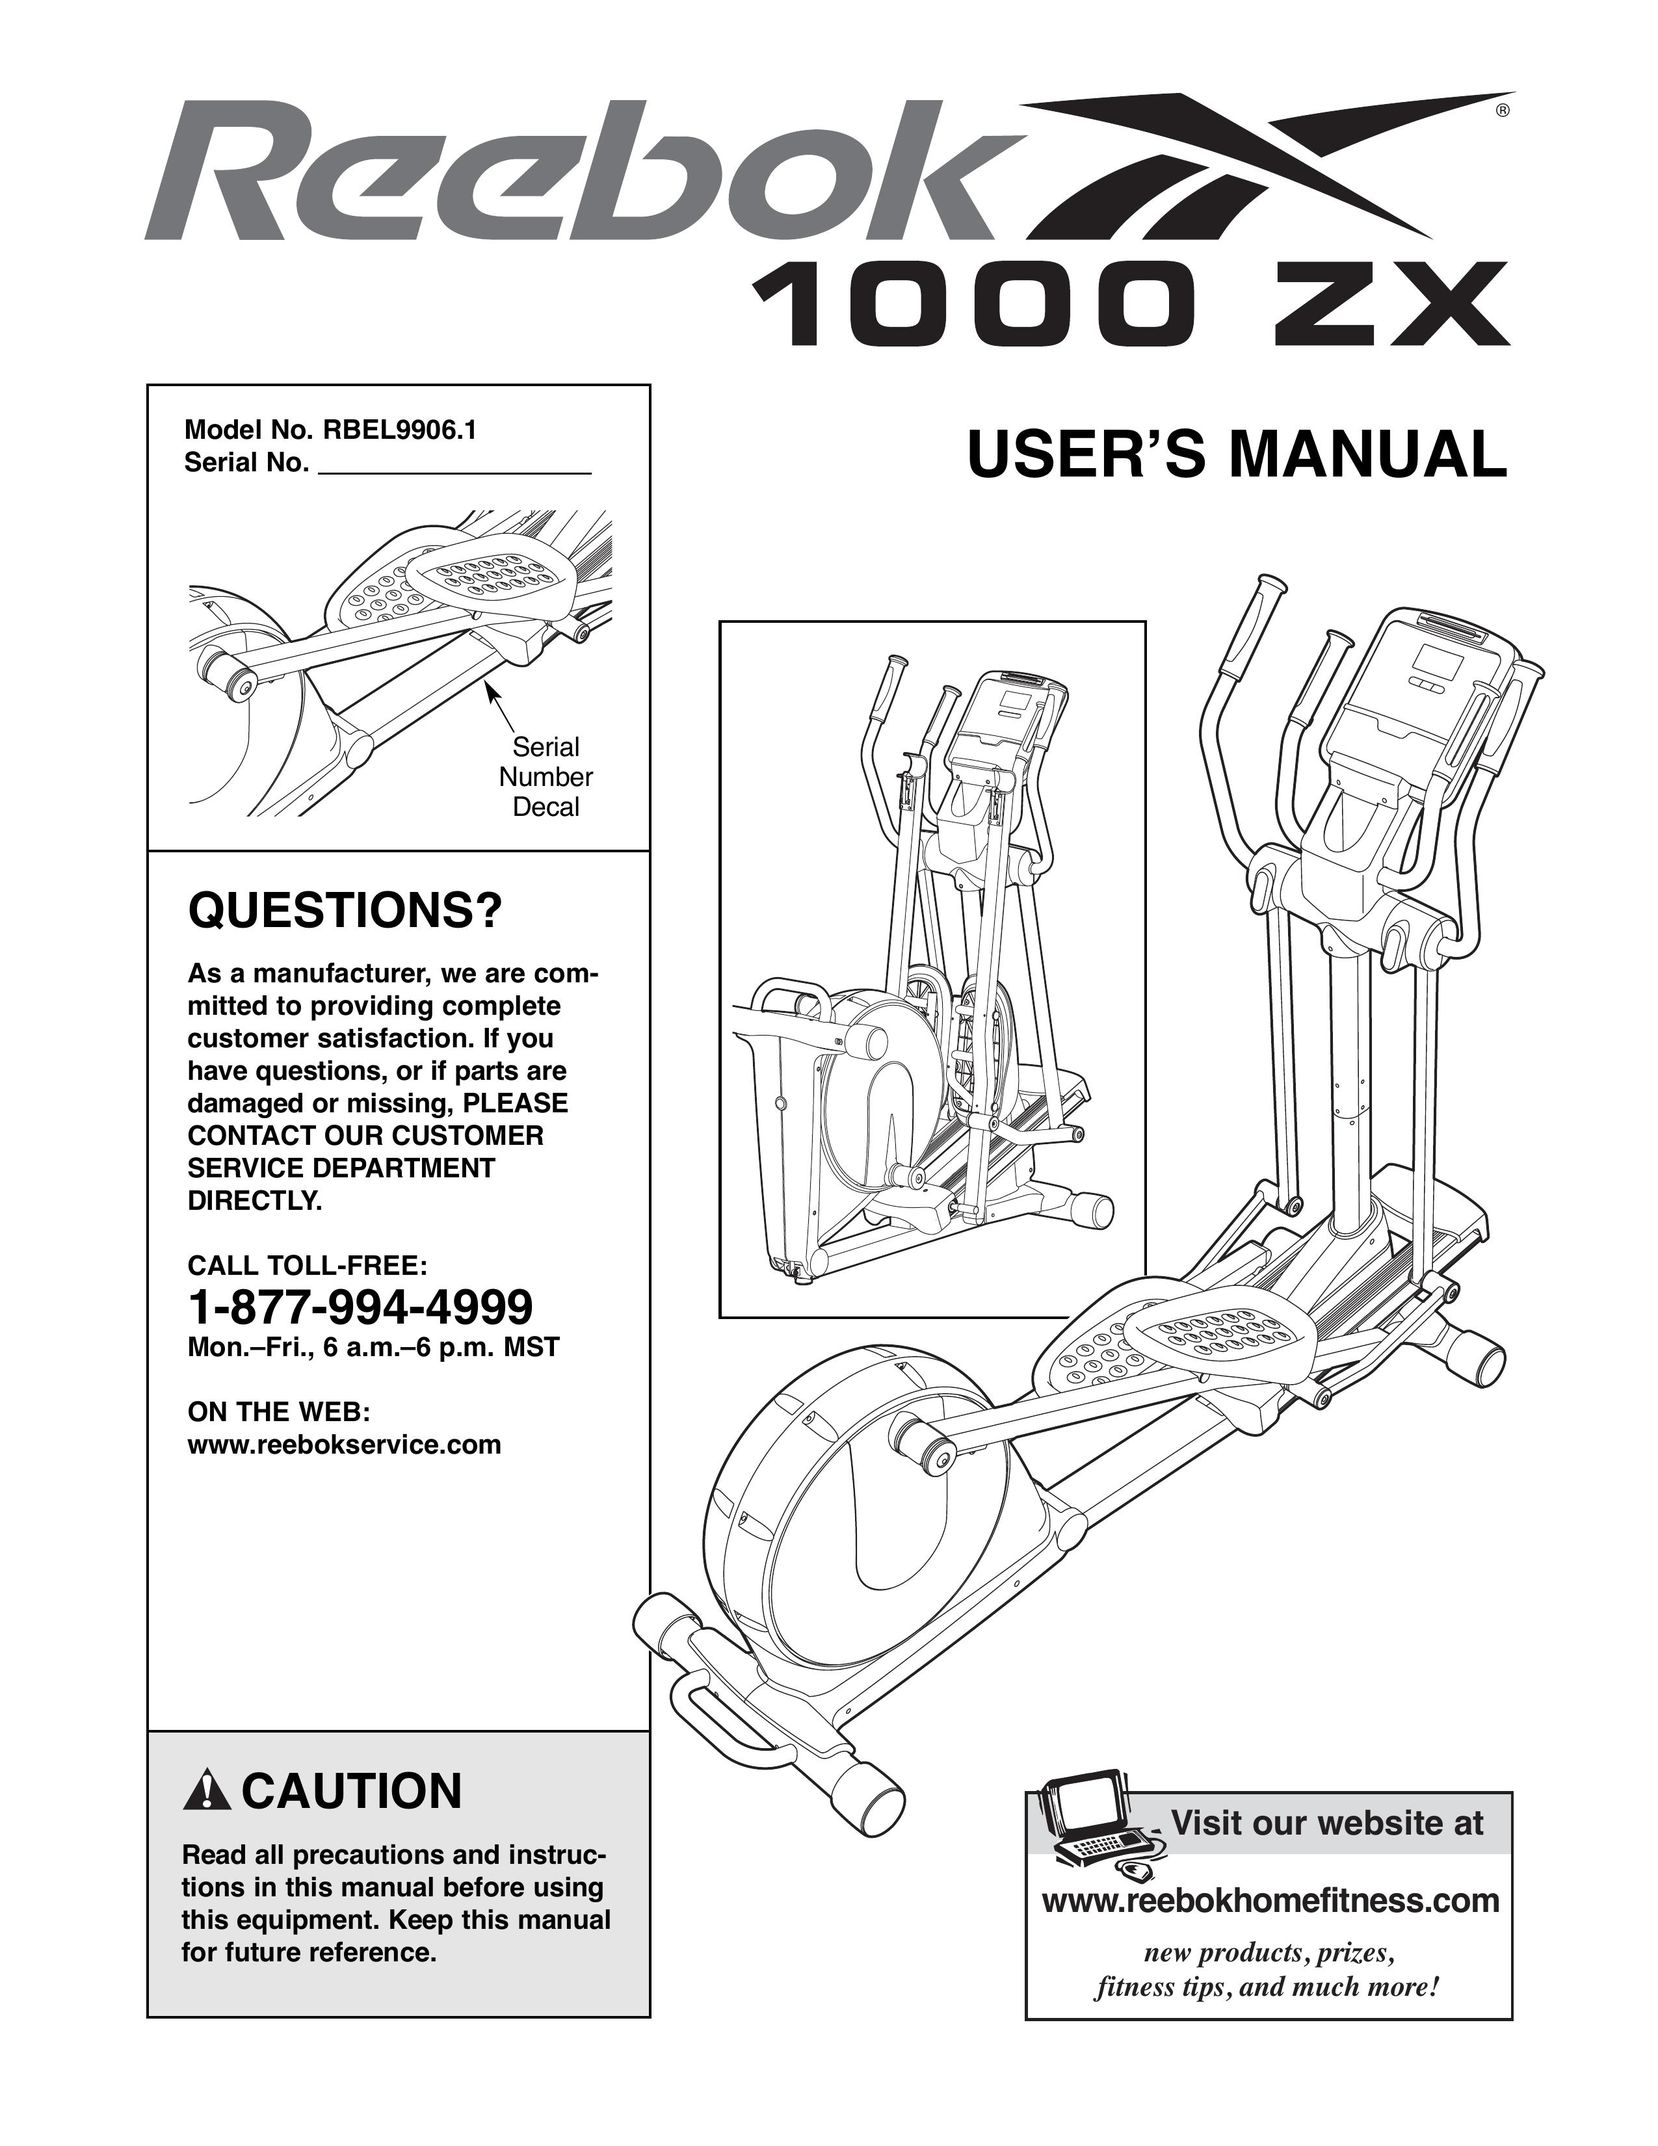 Reebok Fitness RBEL9906.1 Home Gym User Manual